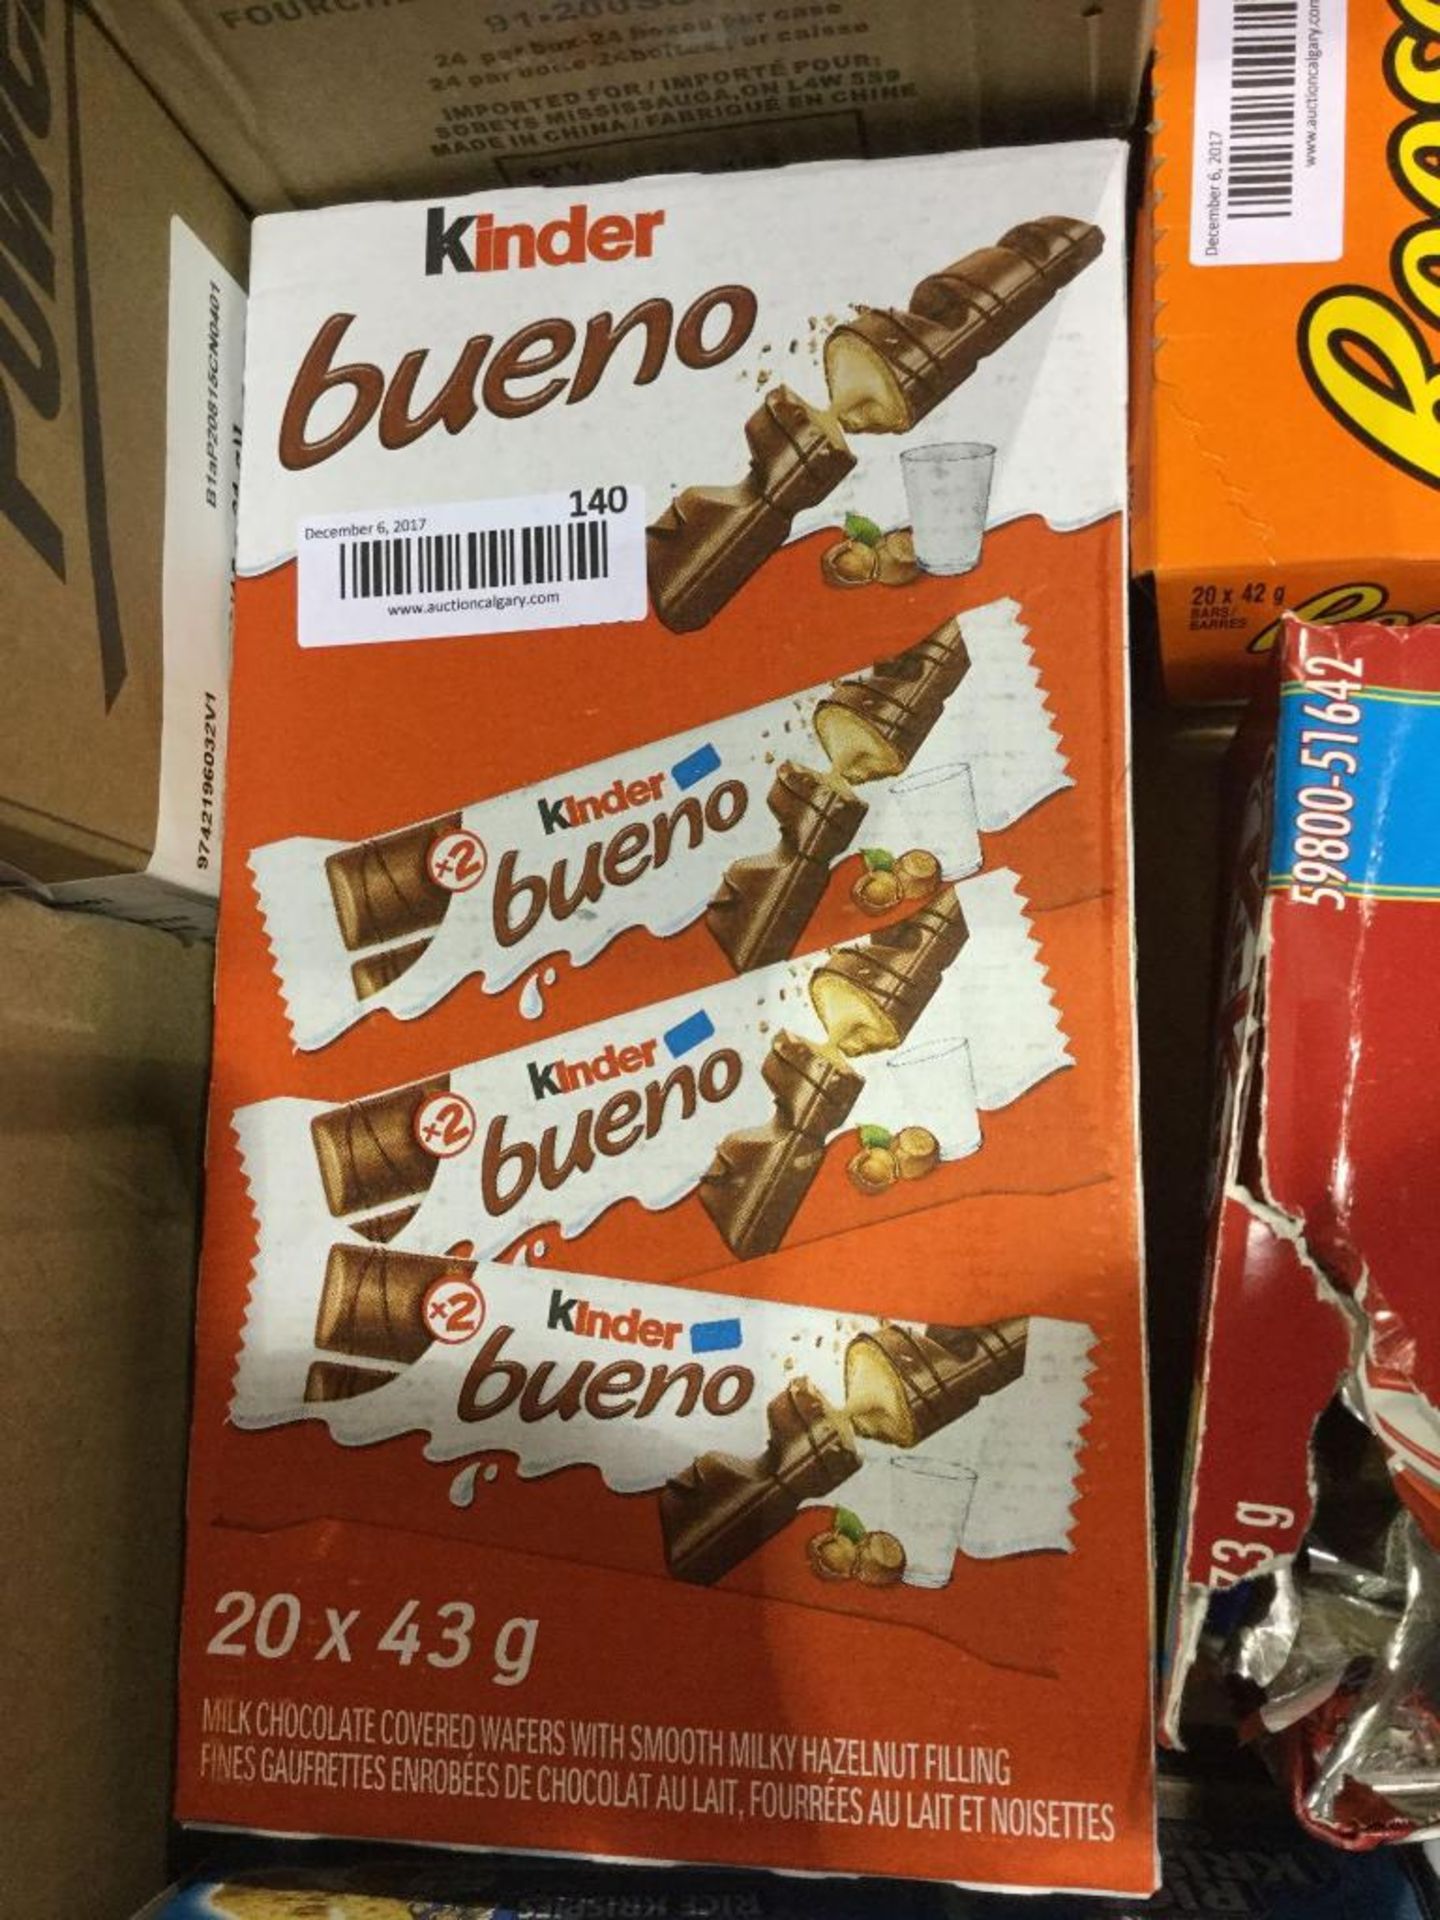 Case of 20 x 43 g Kinder Bueno snacks